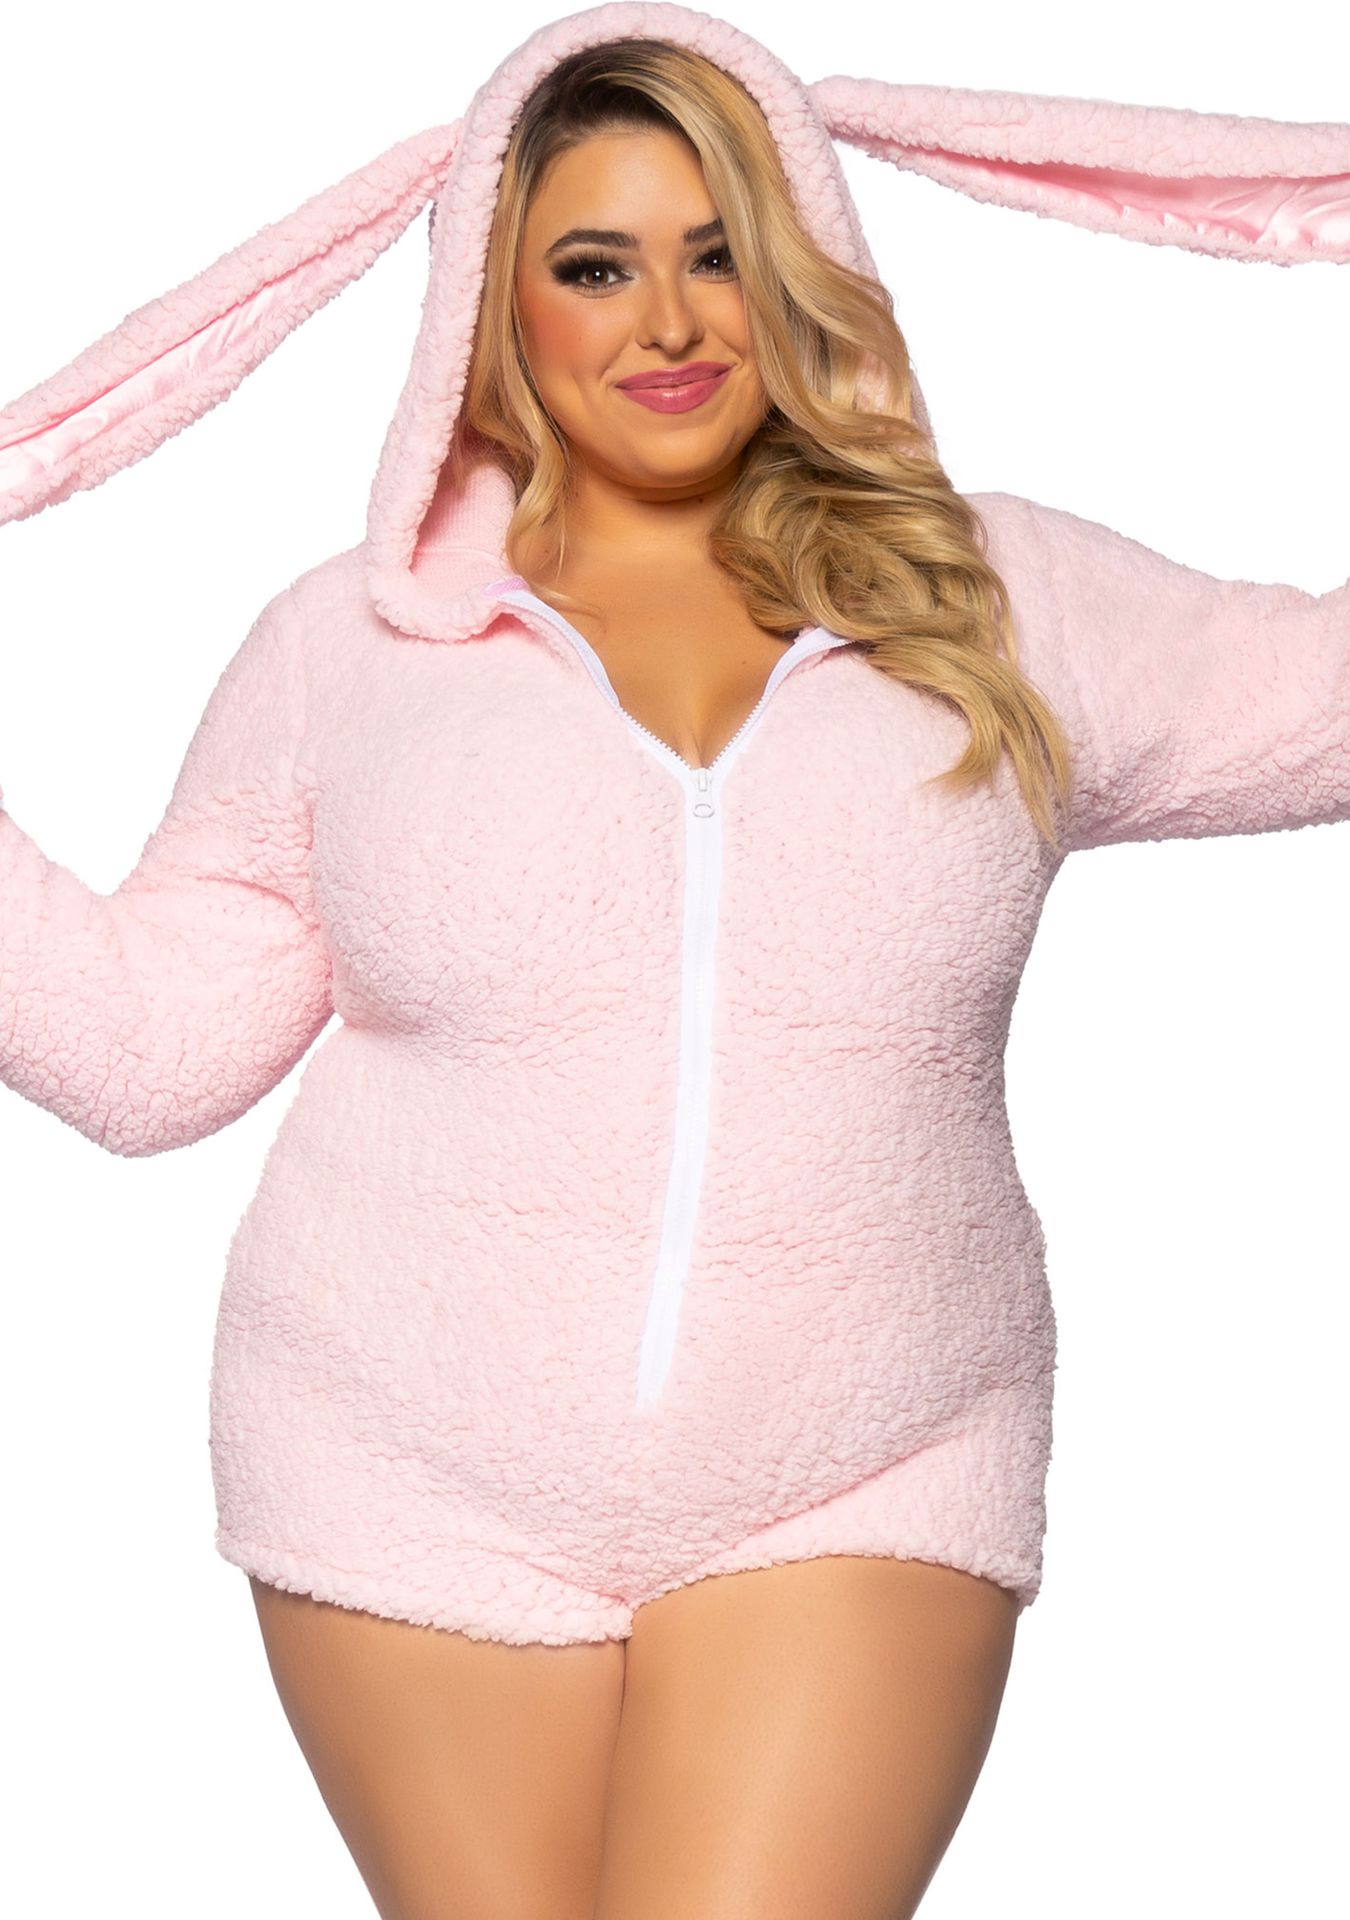 Sexy plus size konijn fleece outfit dames